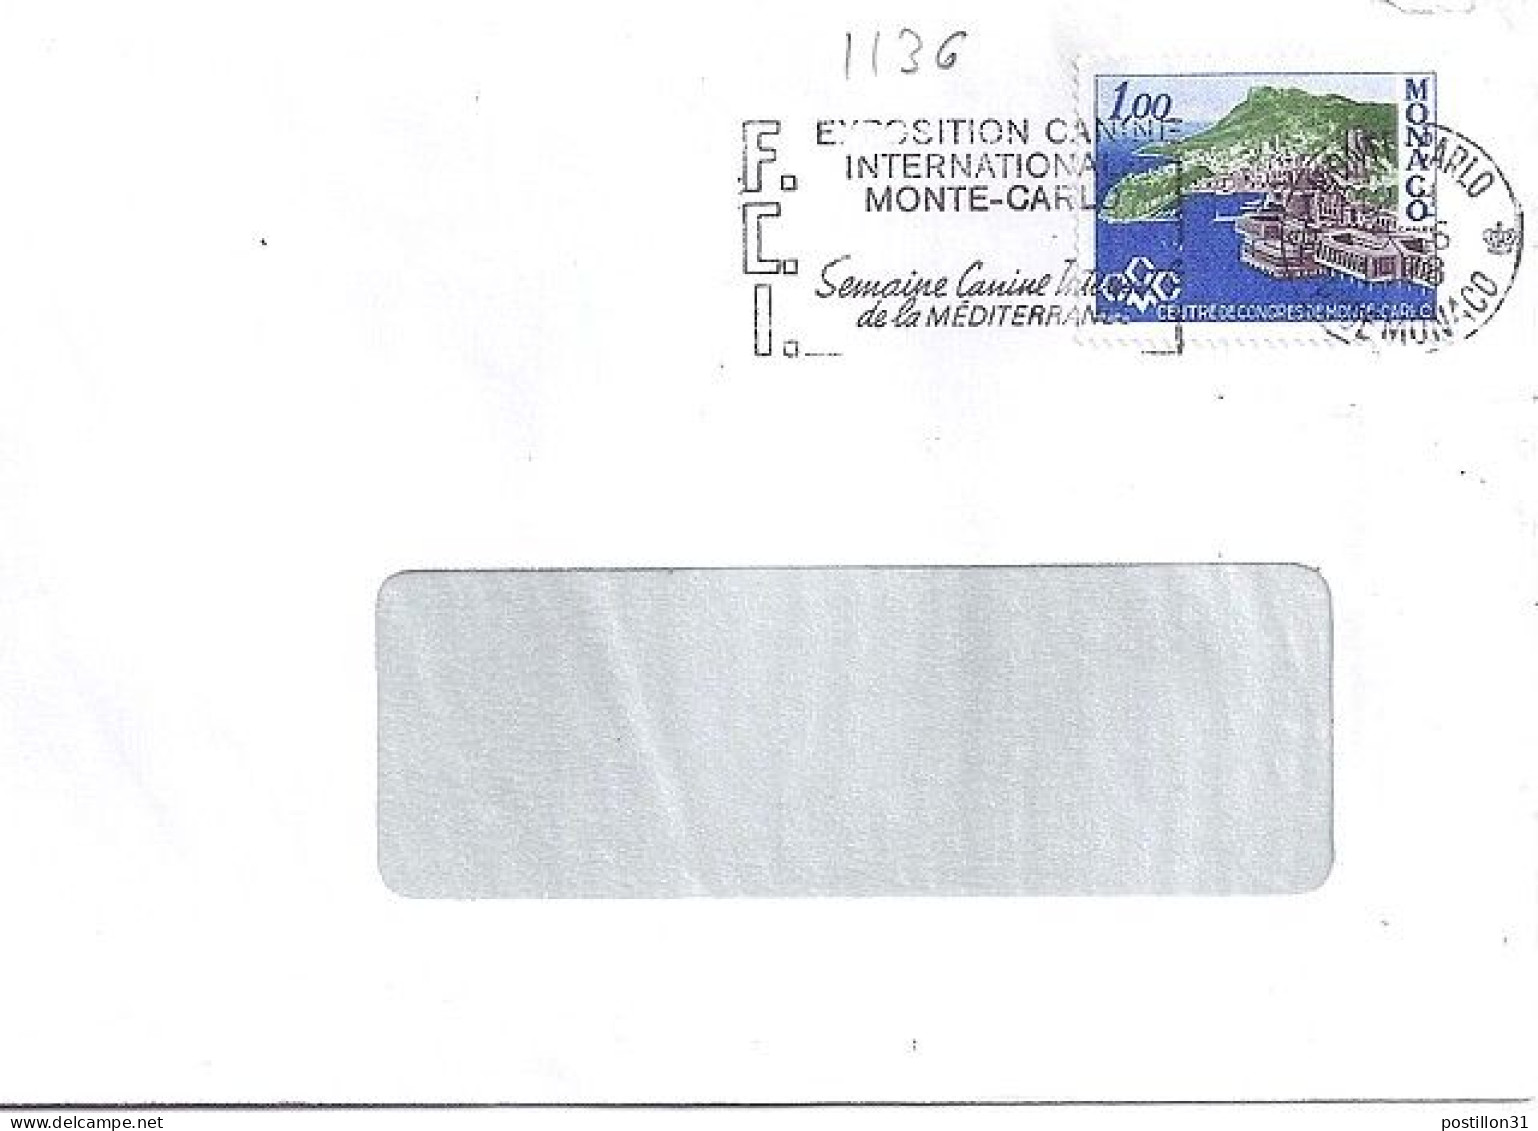 MONACO N° 1136 S/L. DE MONTE CARLO/9.6.78  POUR FRANCE - Briefe U. Dokumente